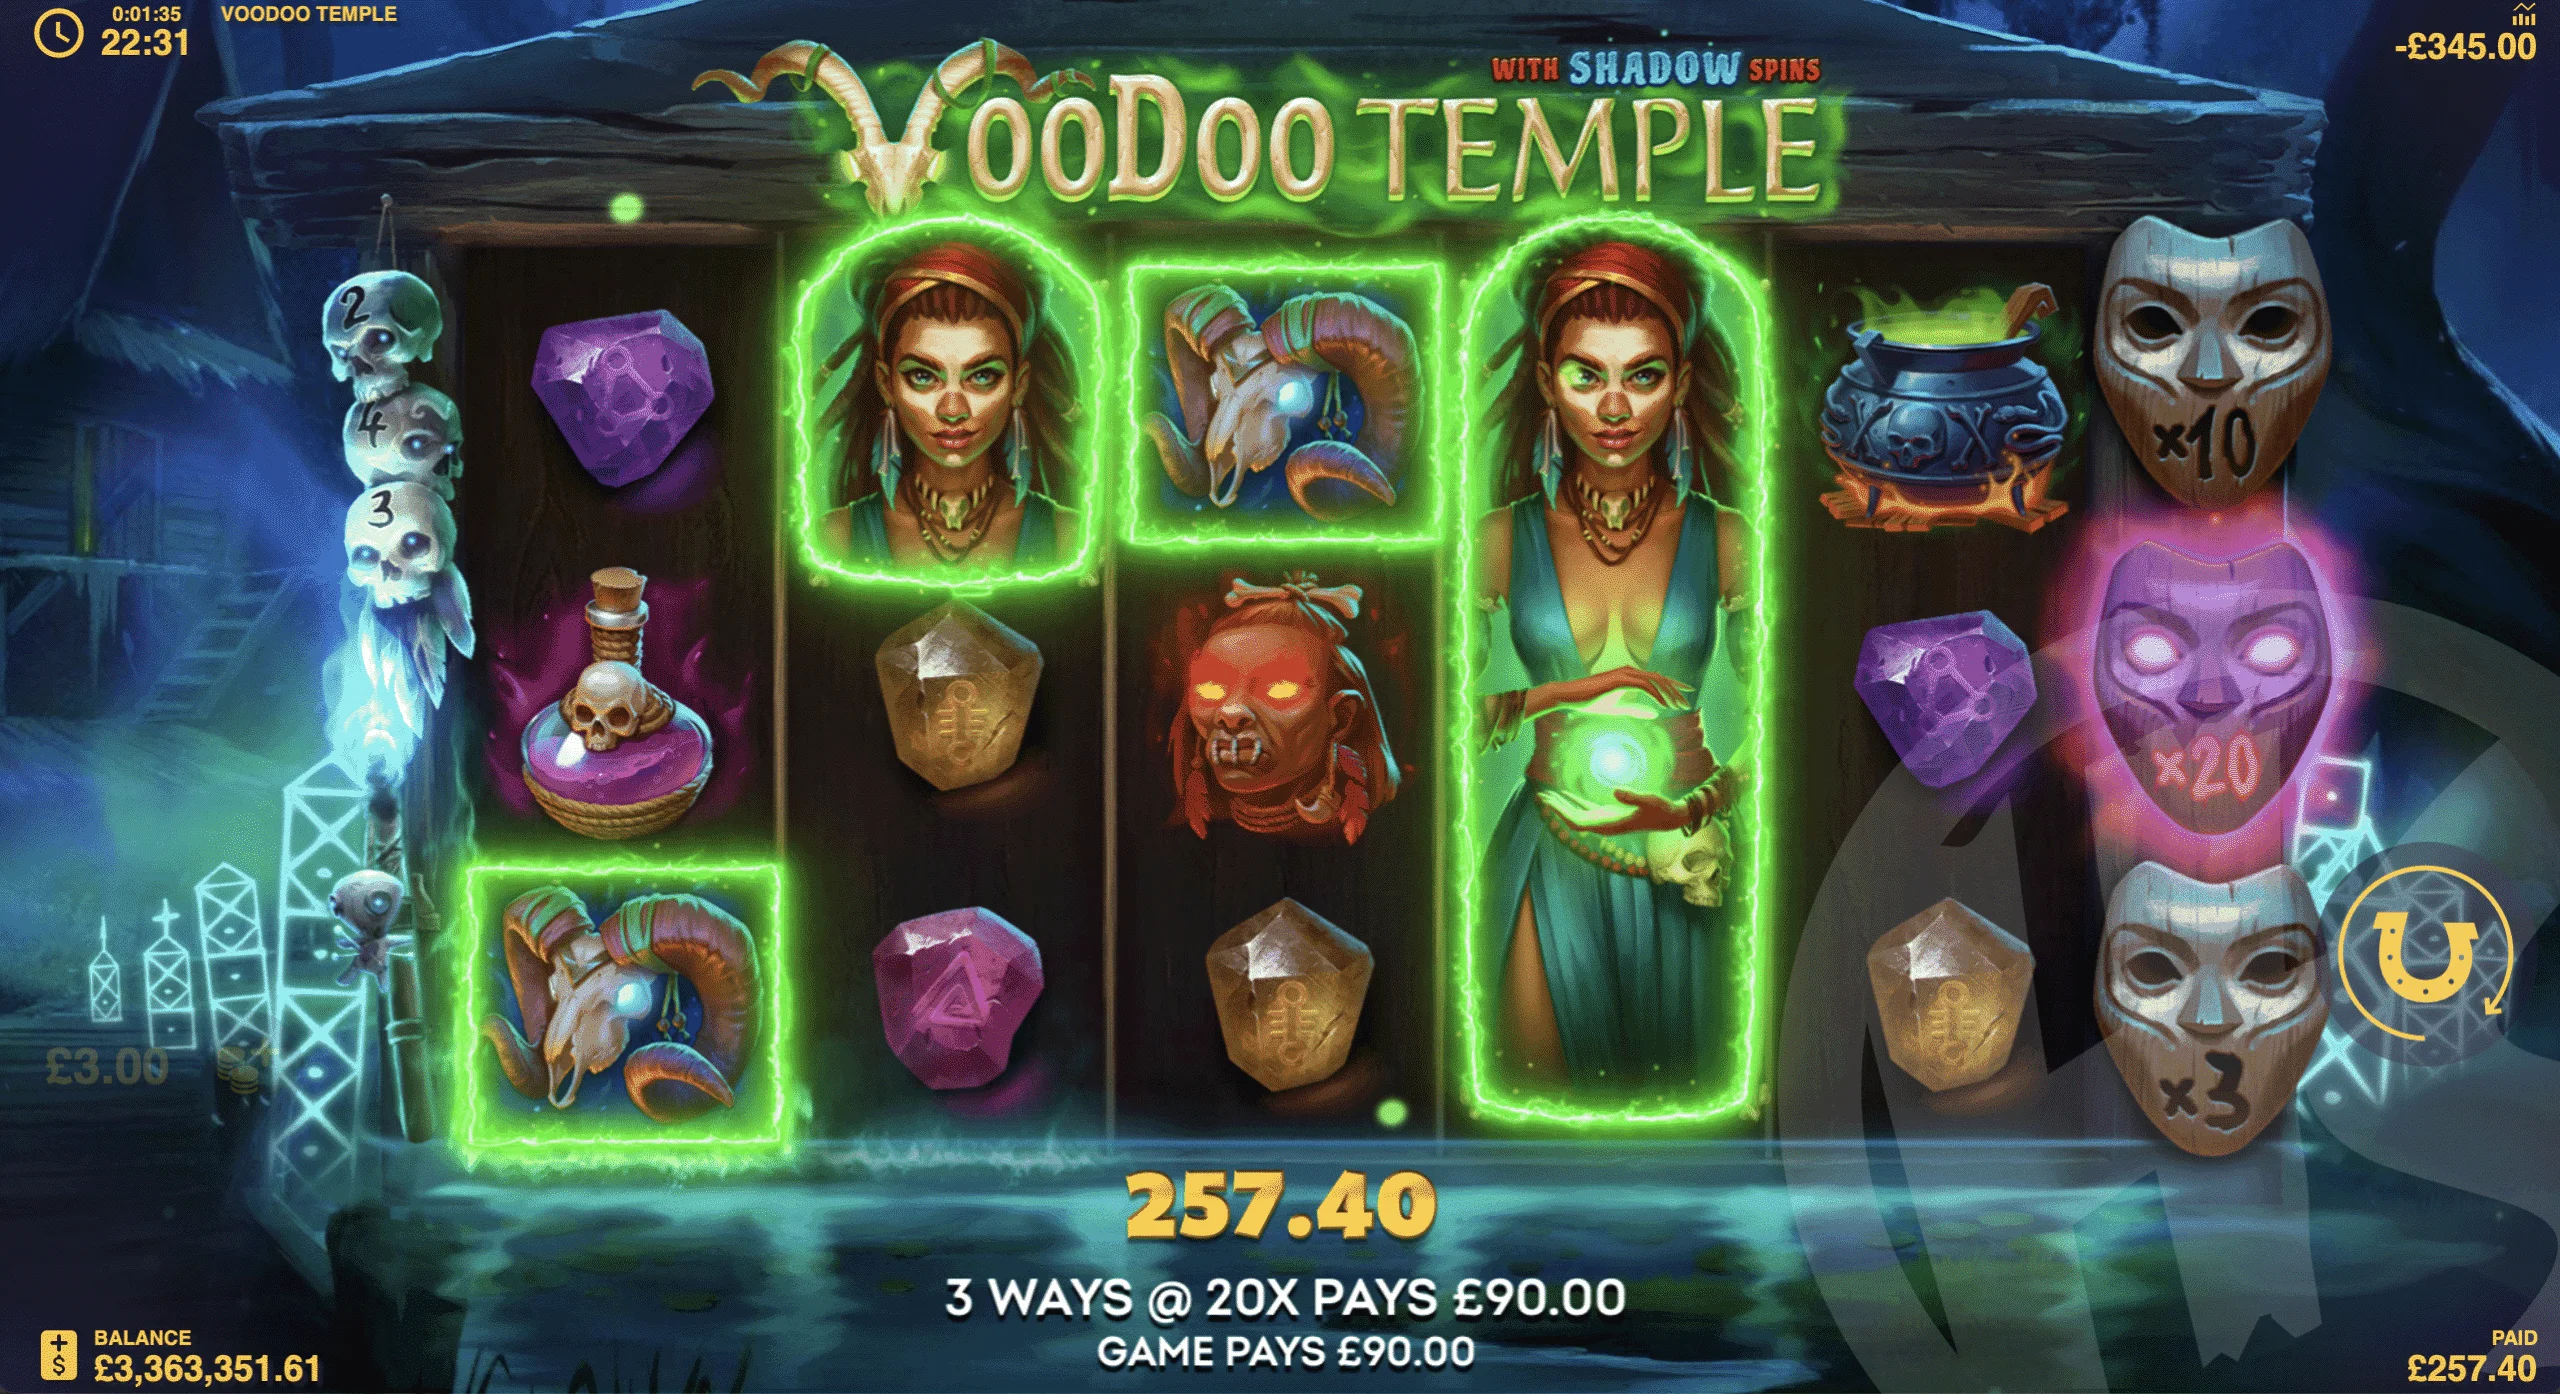 Voodoo Temple Free Spins